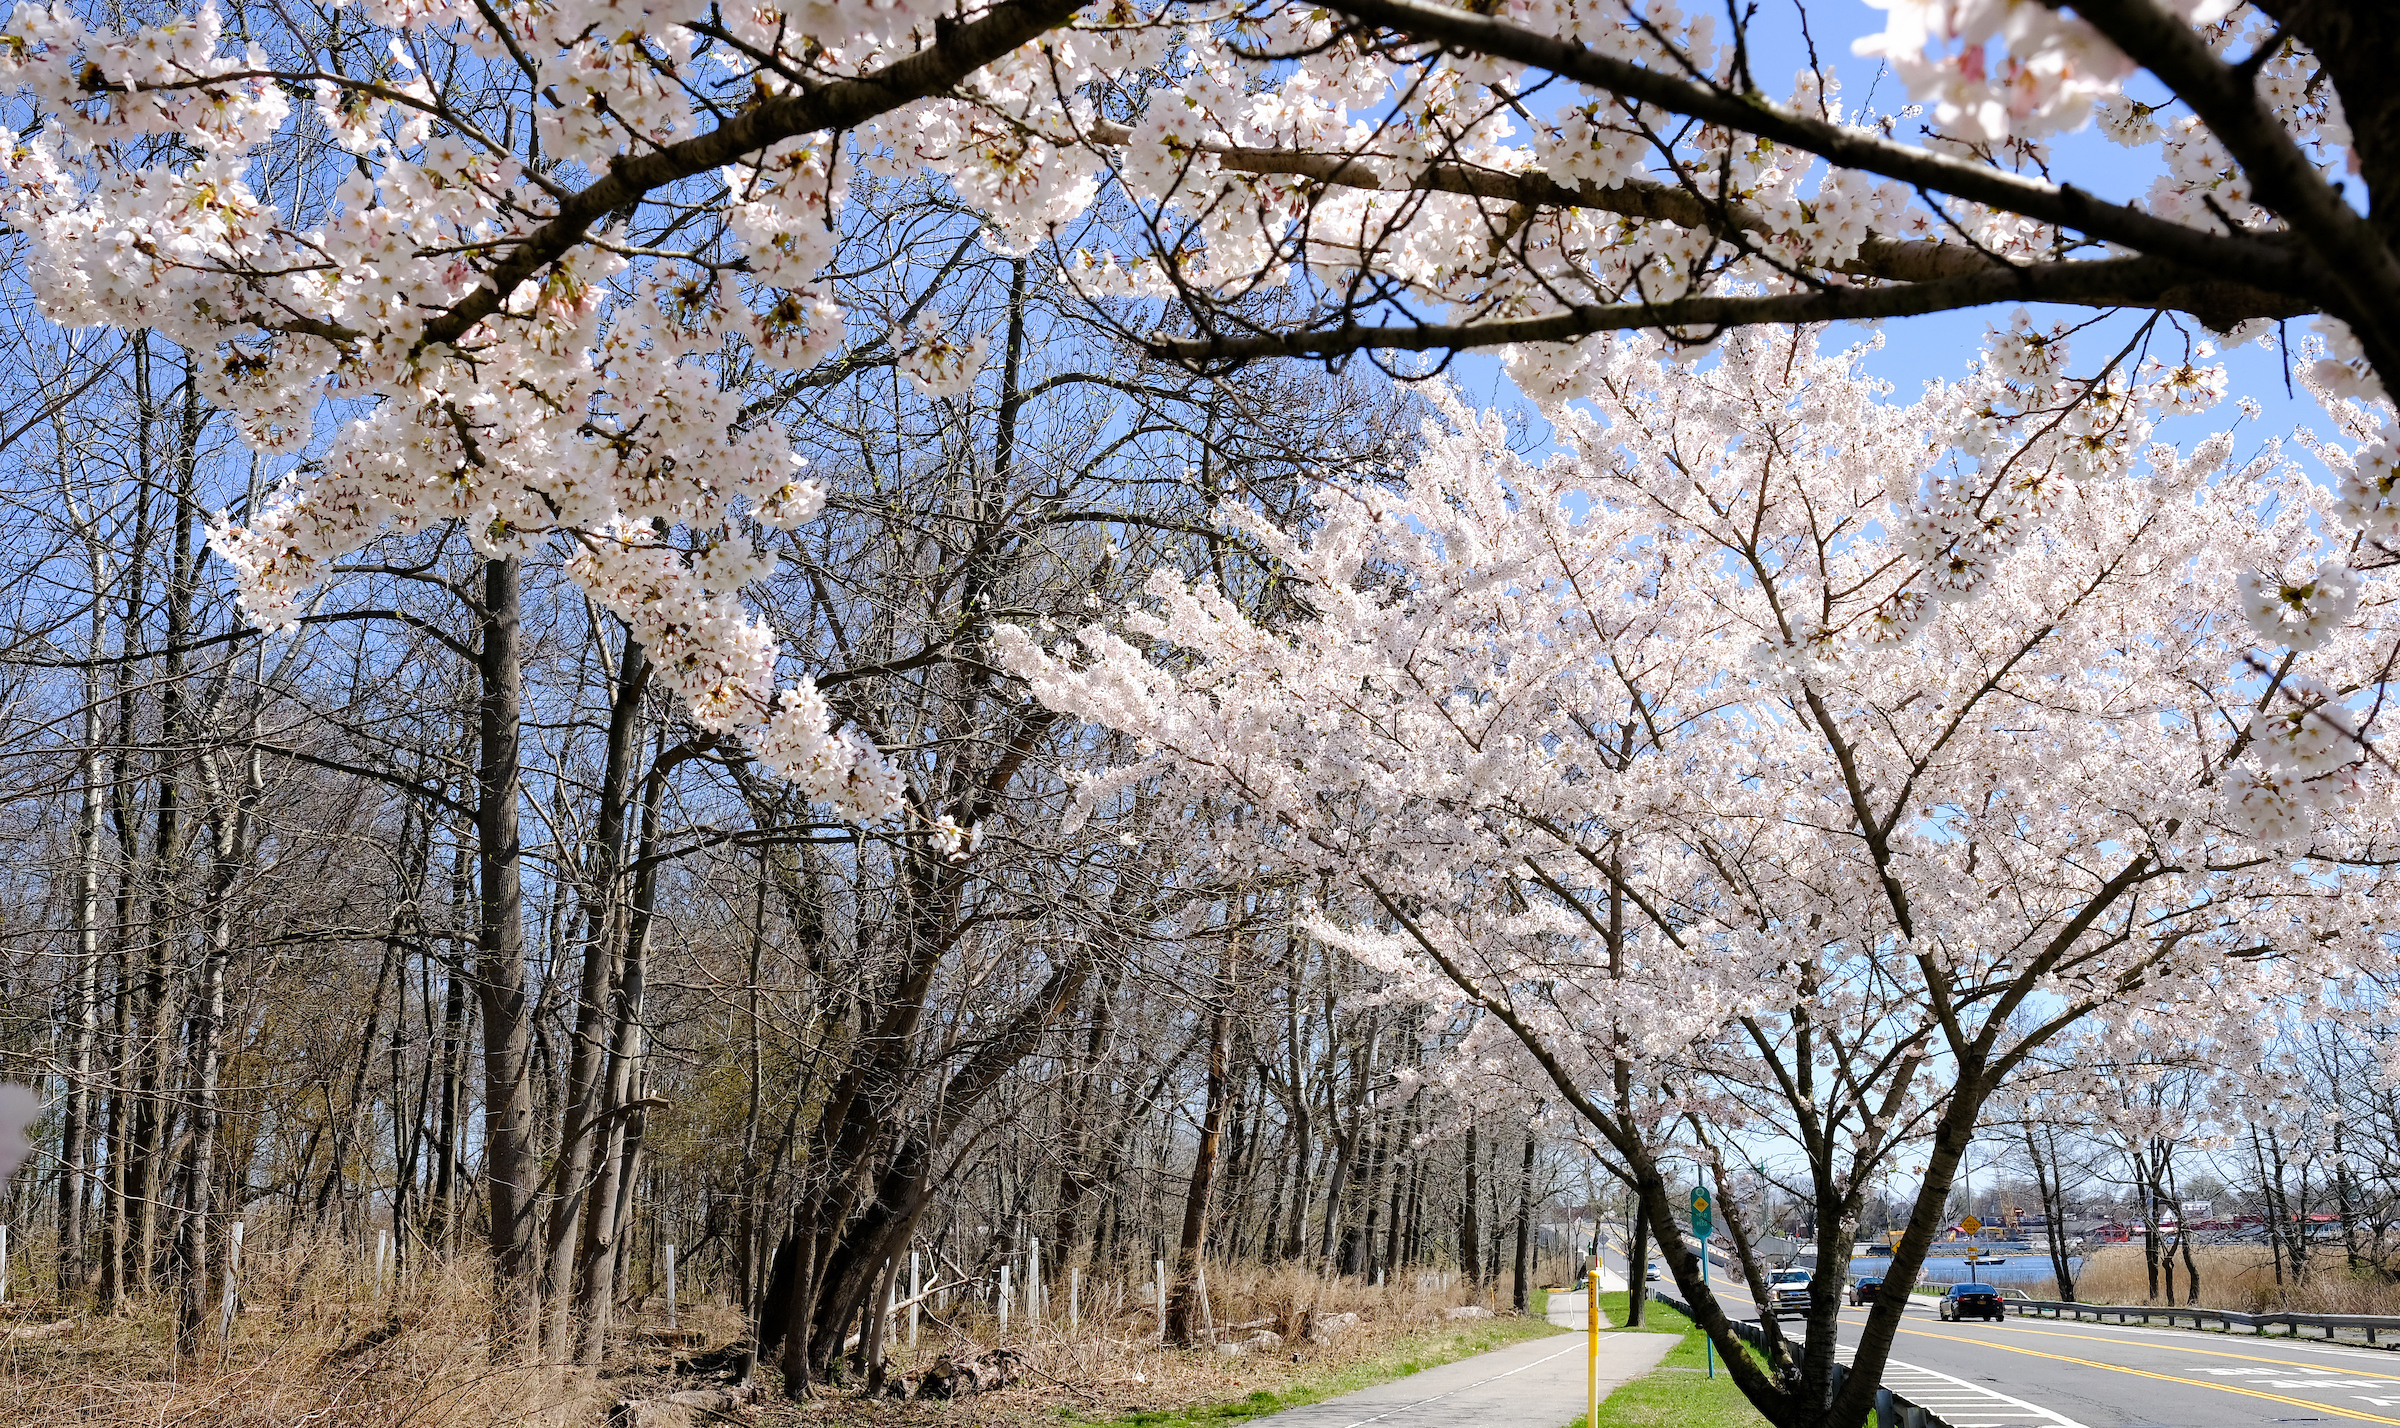 white cherry blossoms on the yoshino trees dot the roadway through the park